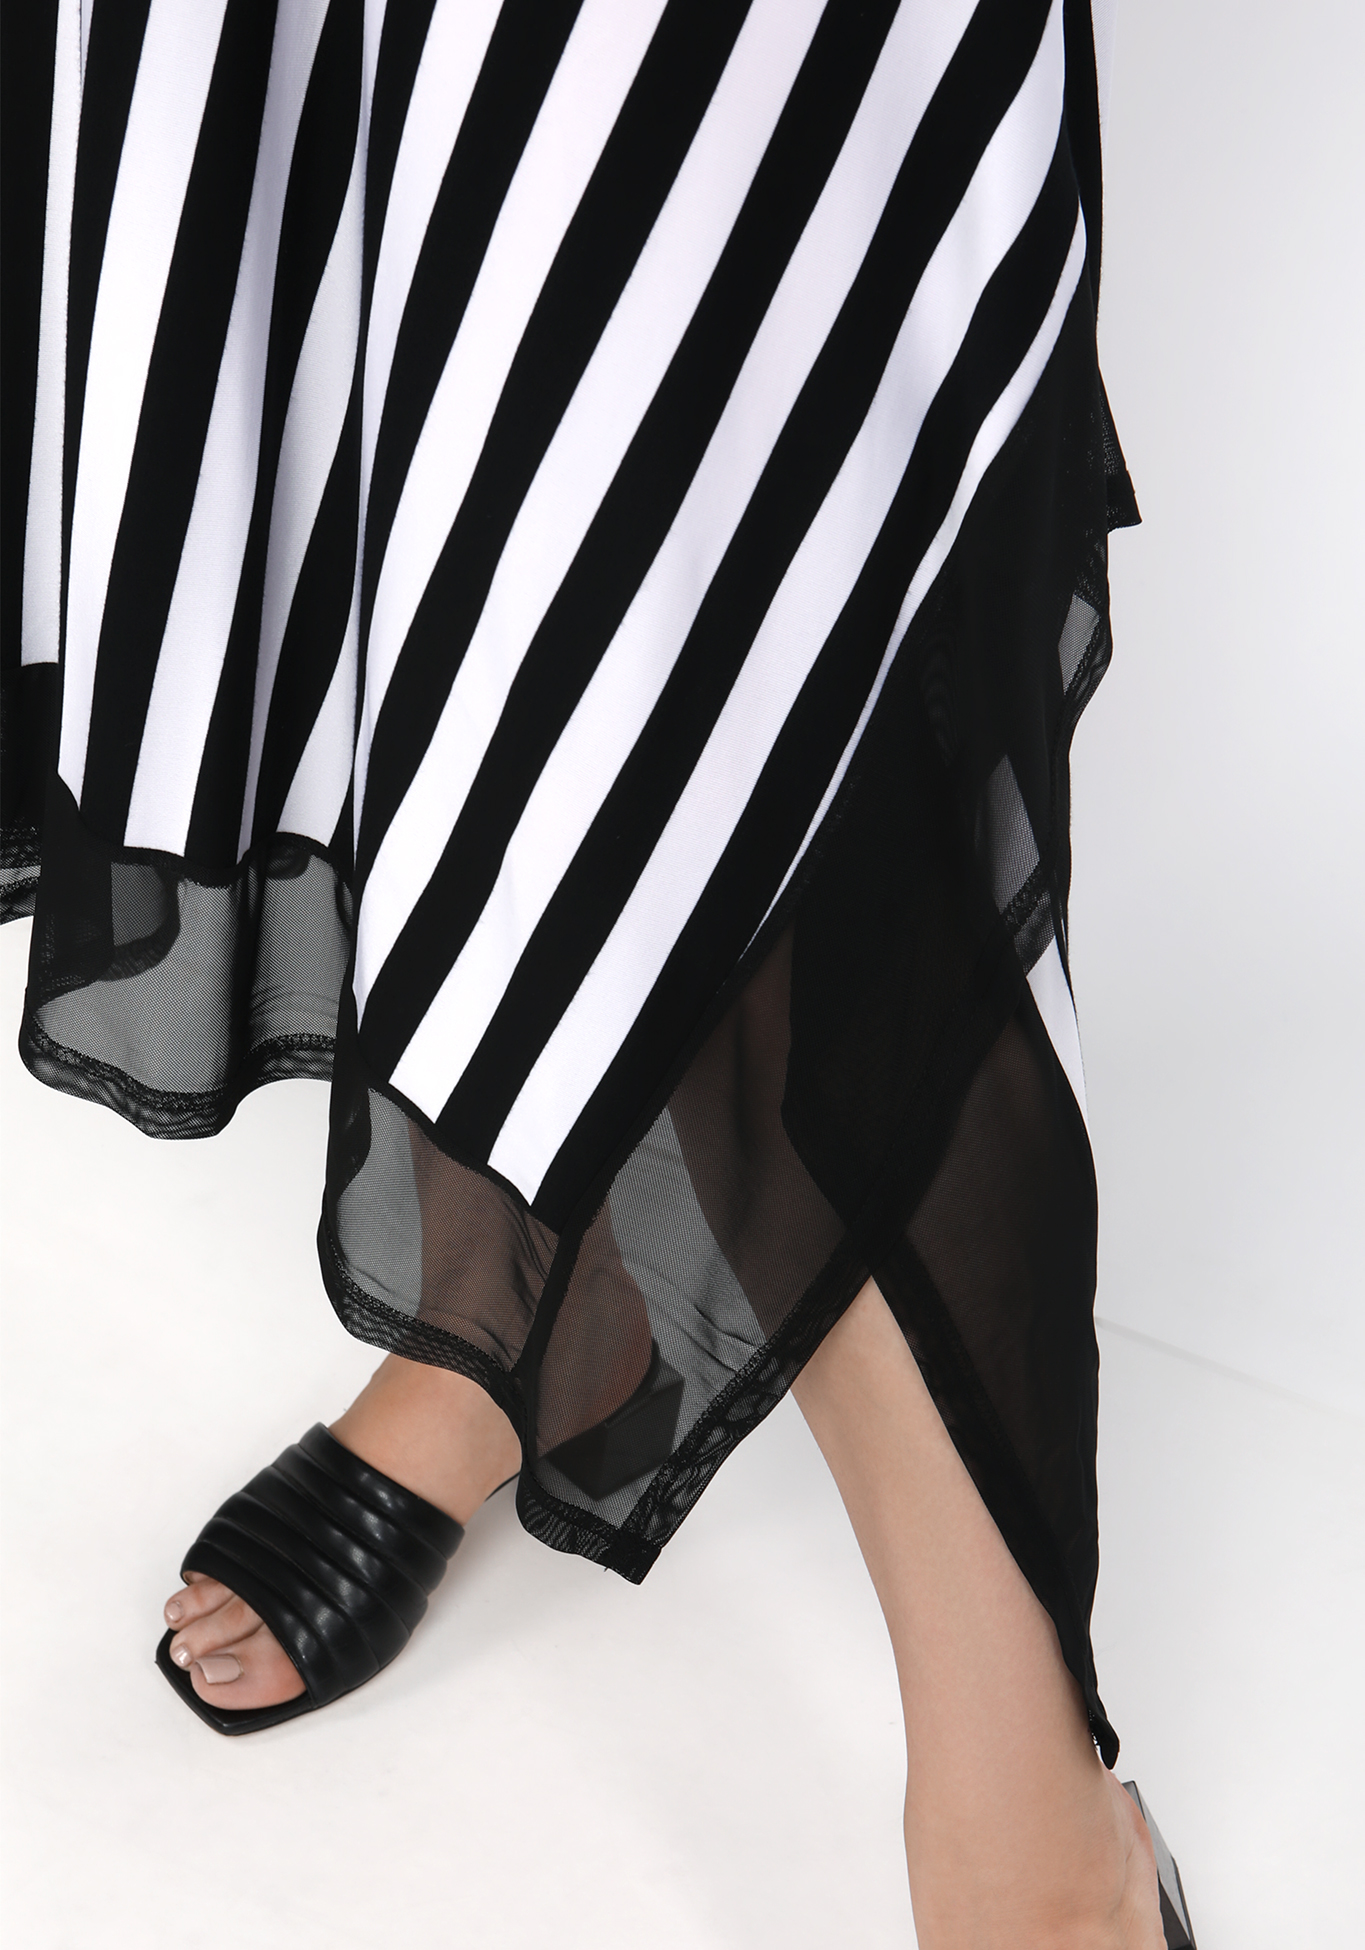 Платье "Чарующий силуэт" ZORY, размер 54, цвет черно-белый - фото 3